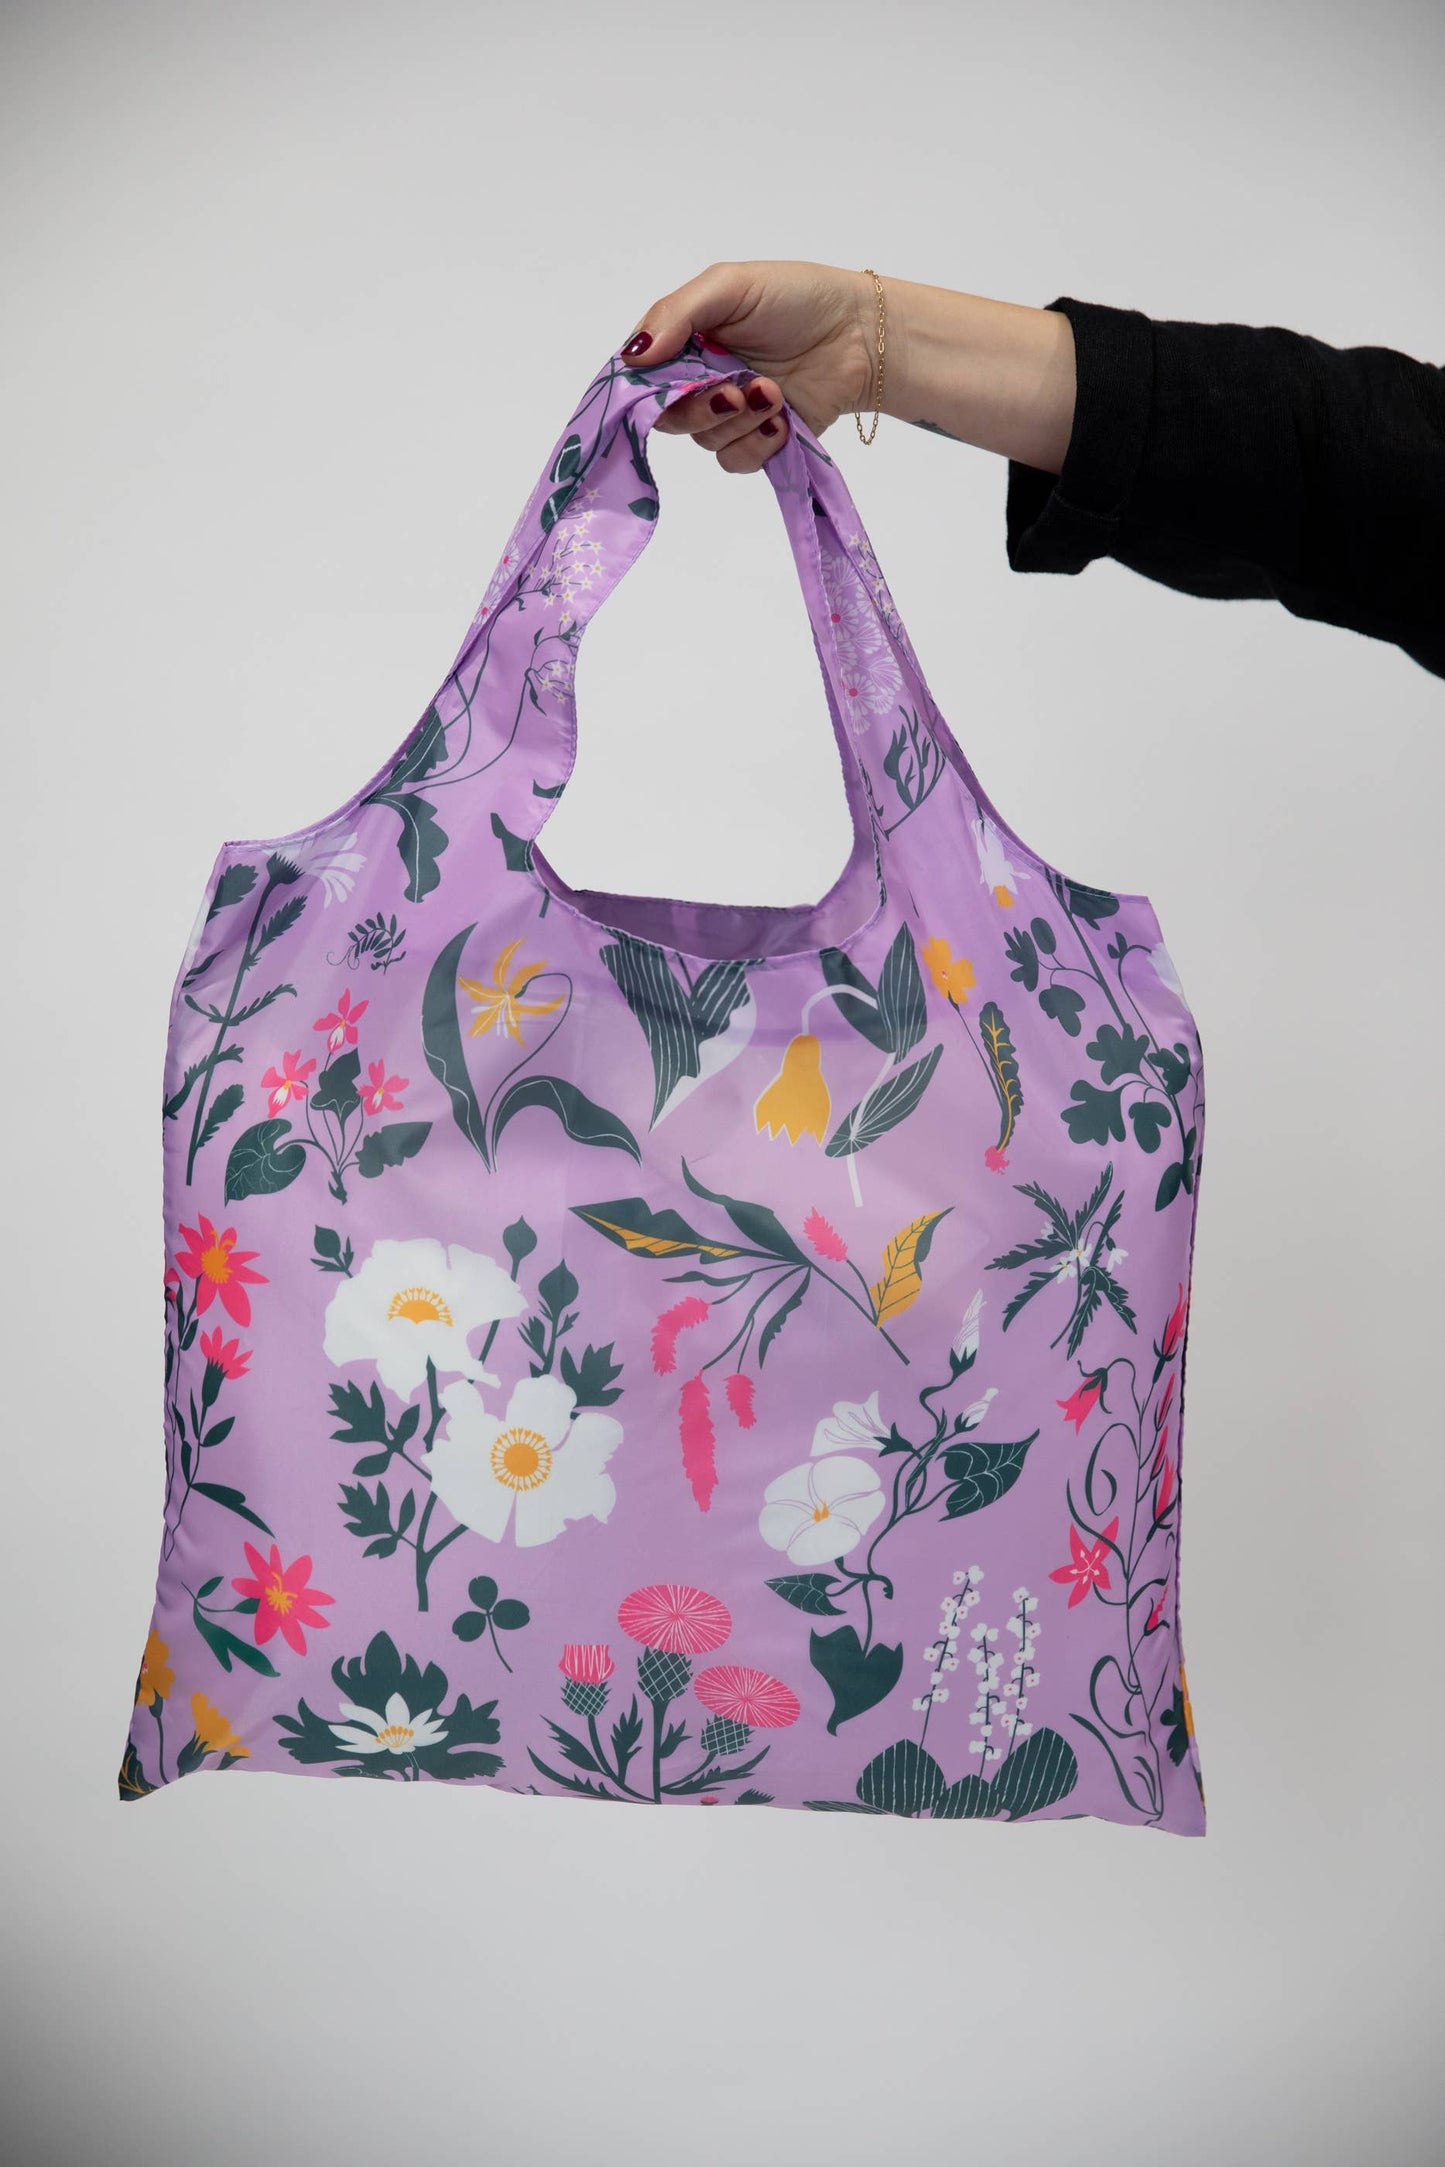 Floral Art Sack by Banquet Workshop - Reusable Tote Bag